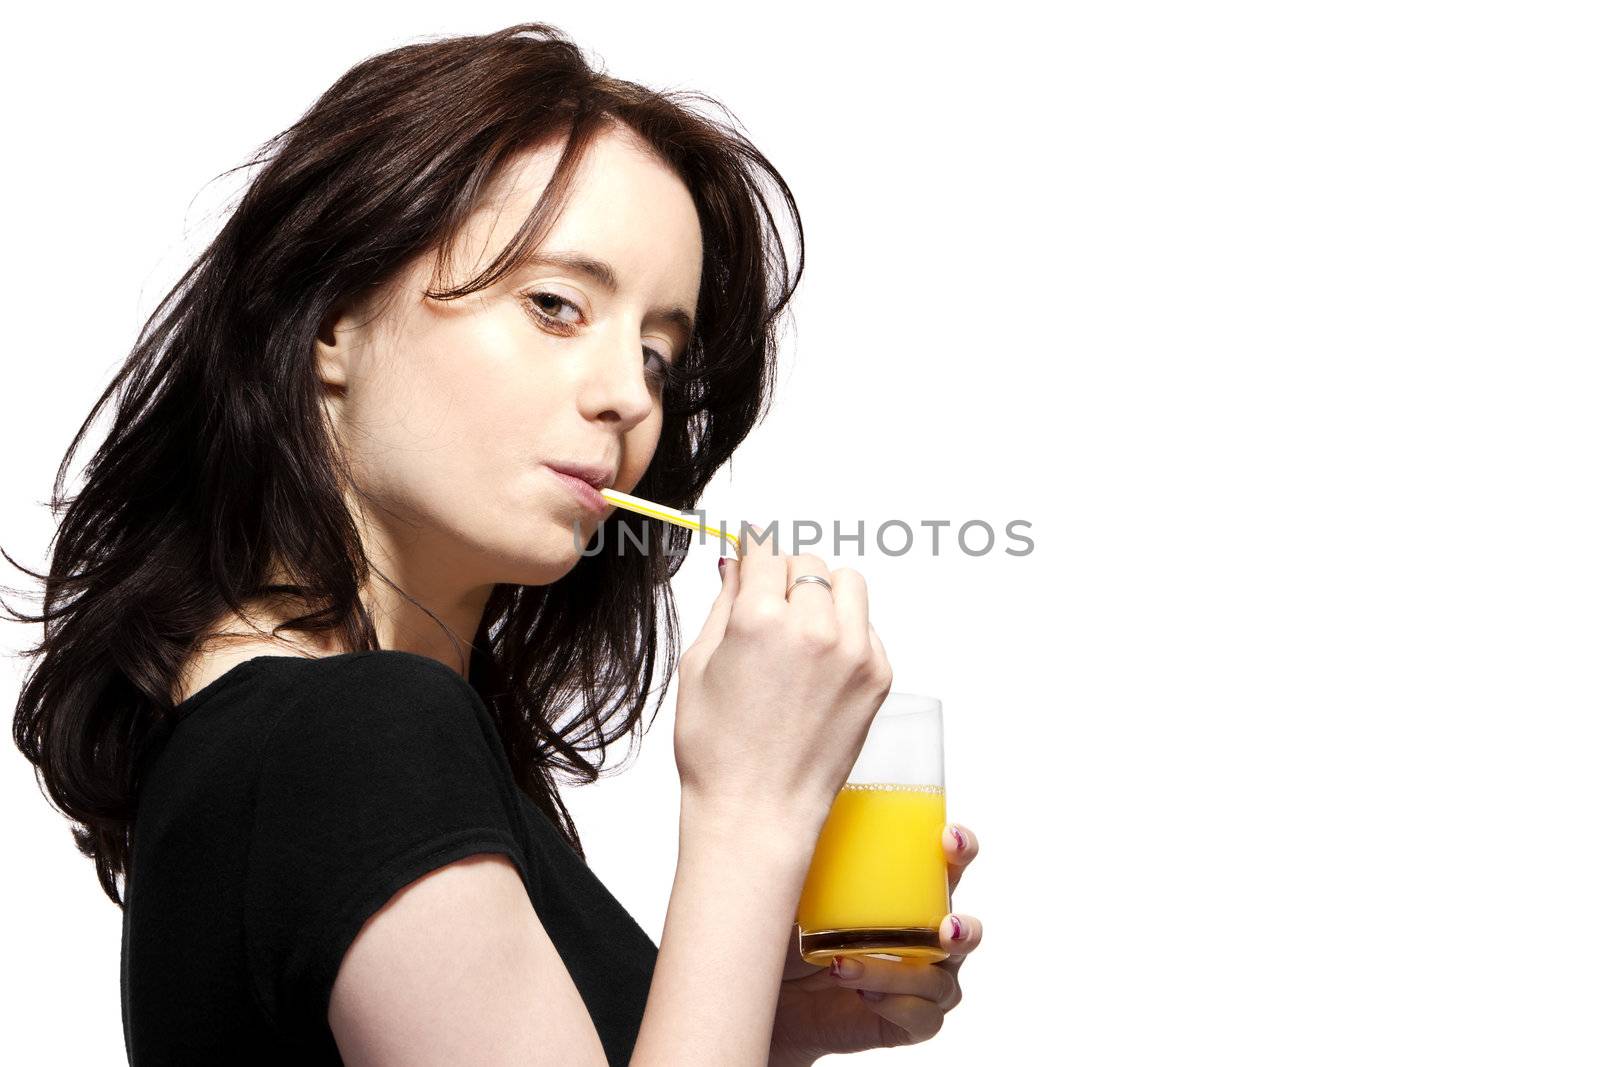 young woman in black shirt drinking orange juice